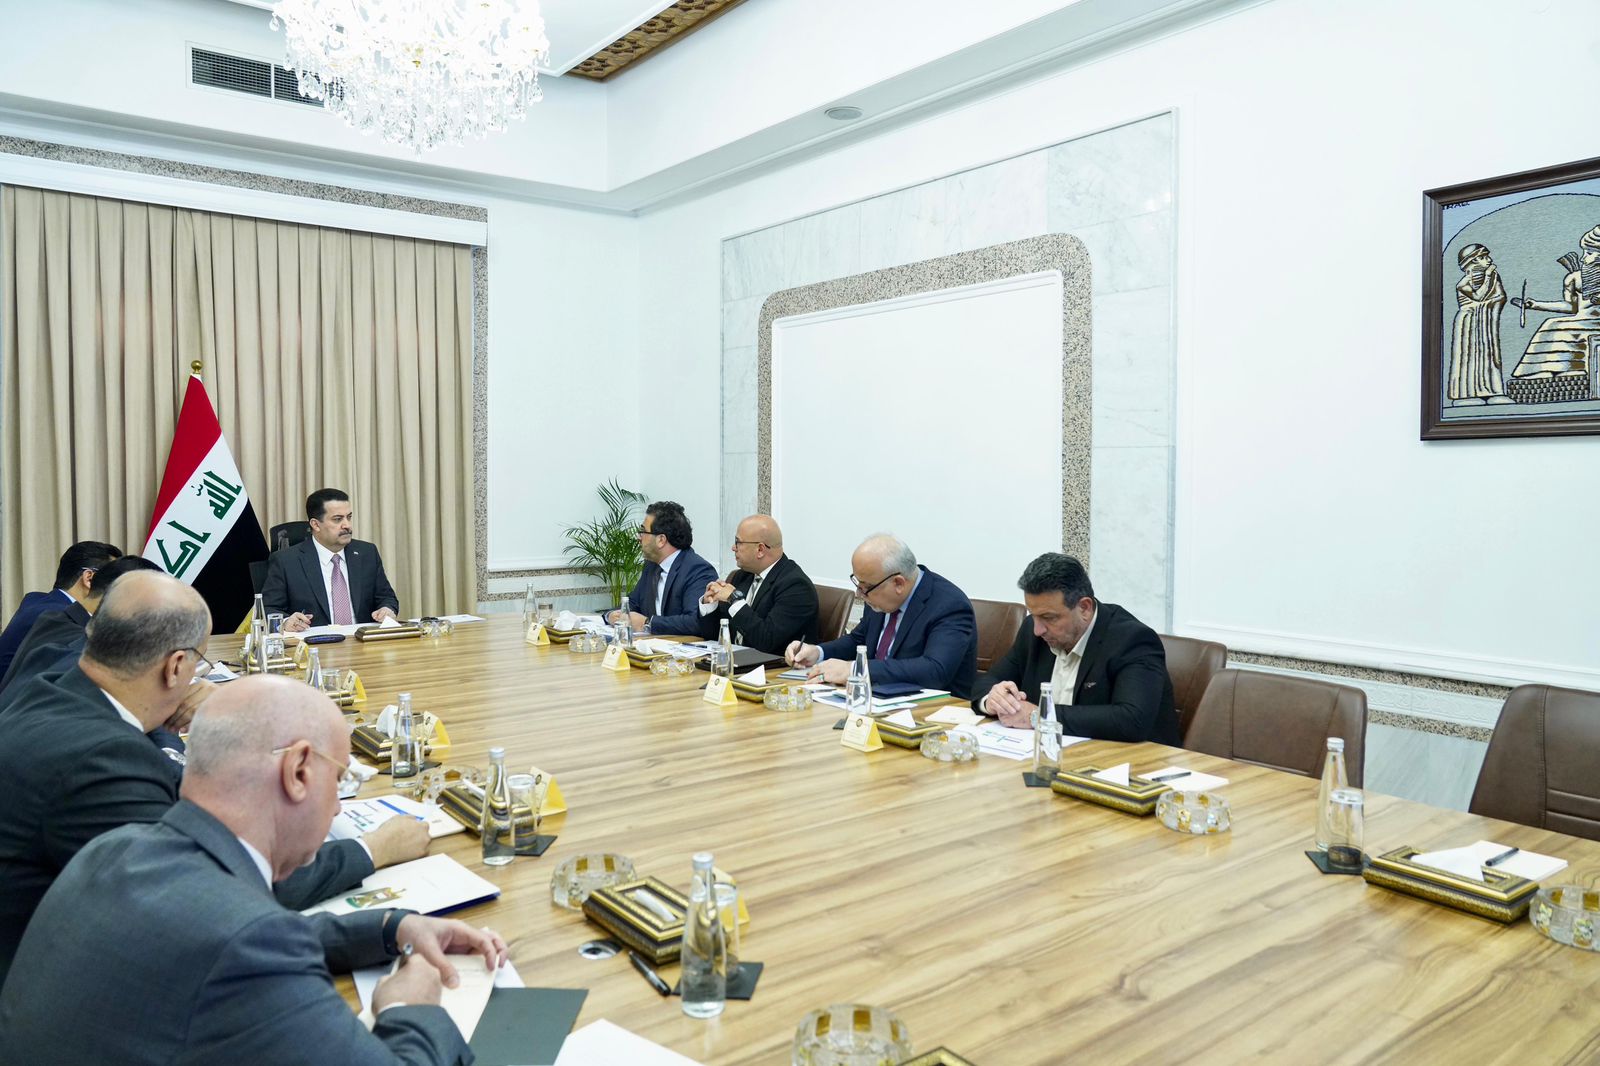 PM Al-Sudani meets IFC delegation to advance Baghdad Airport development